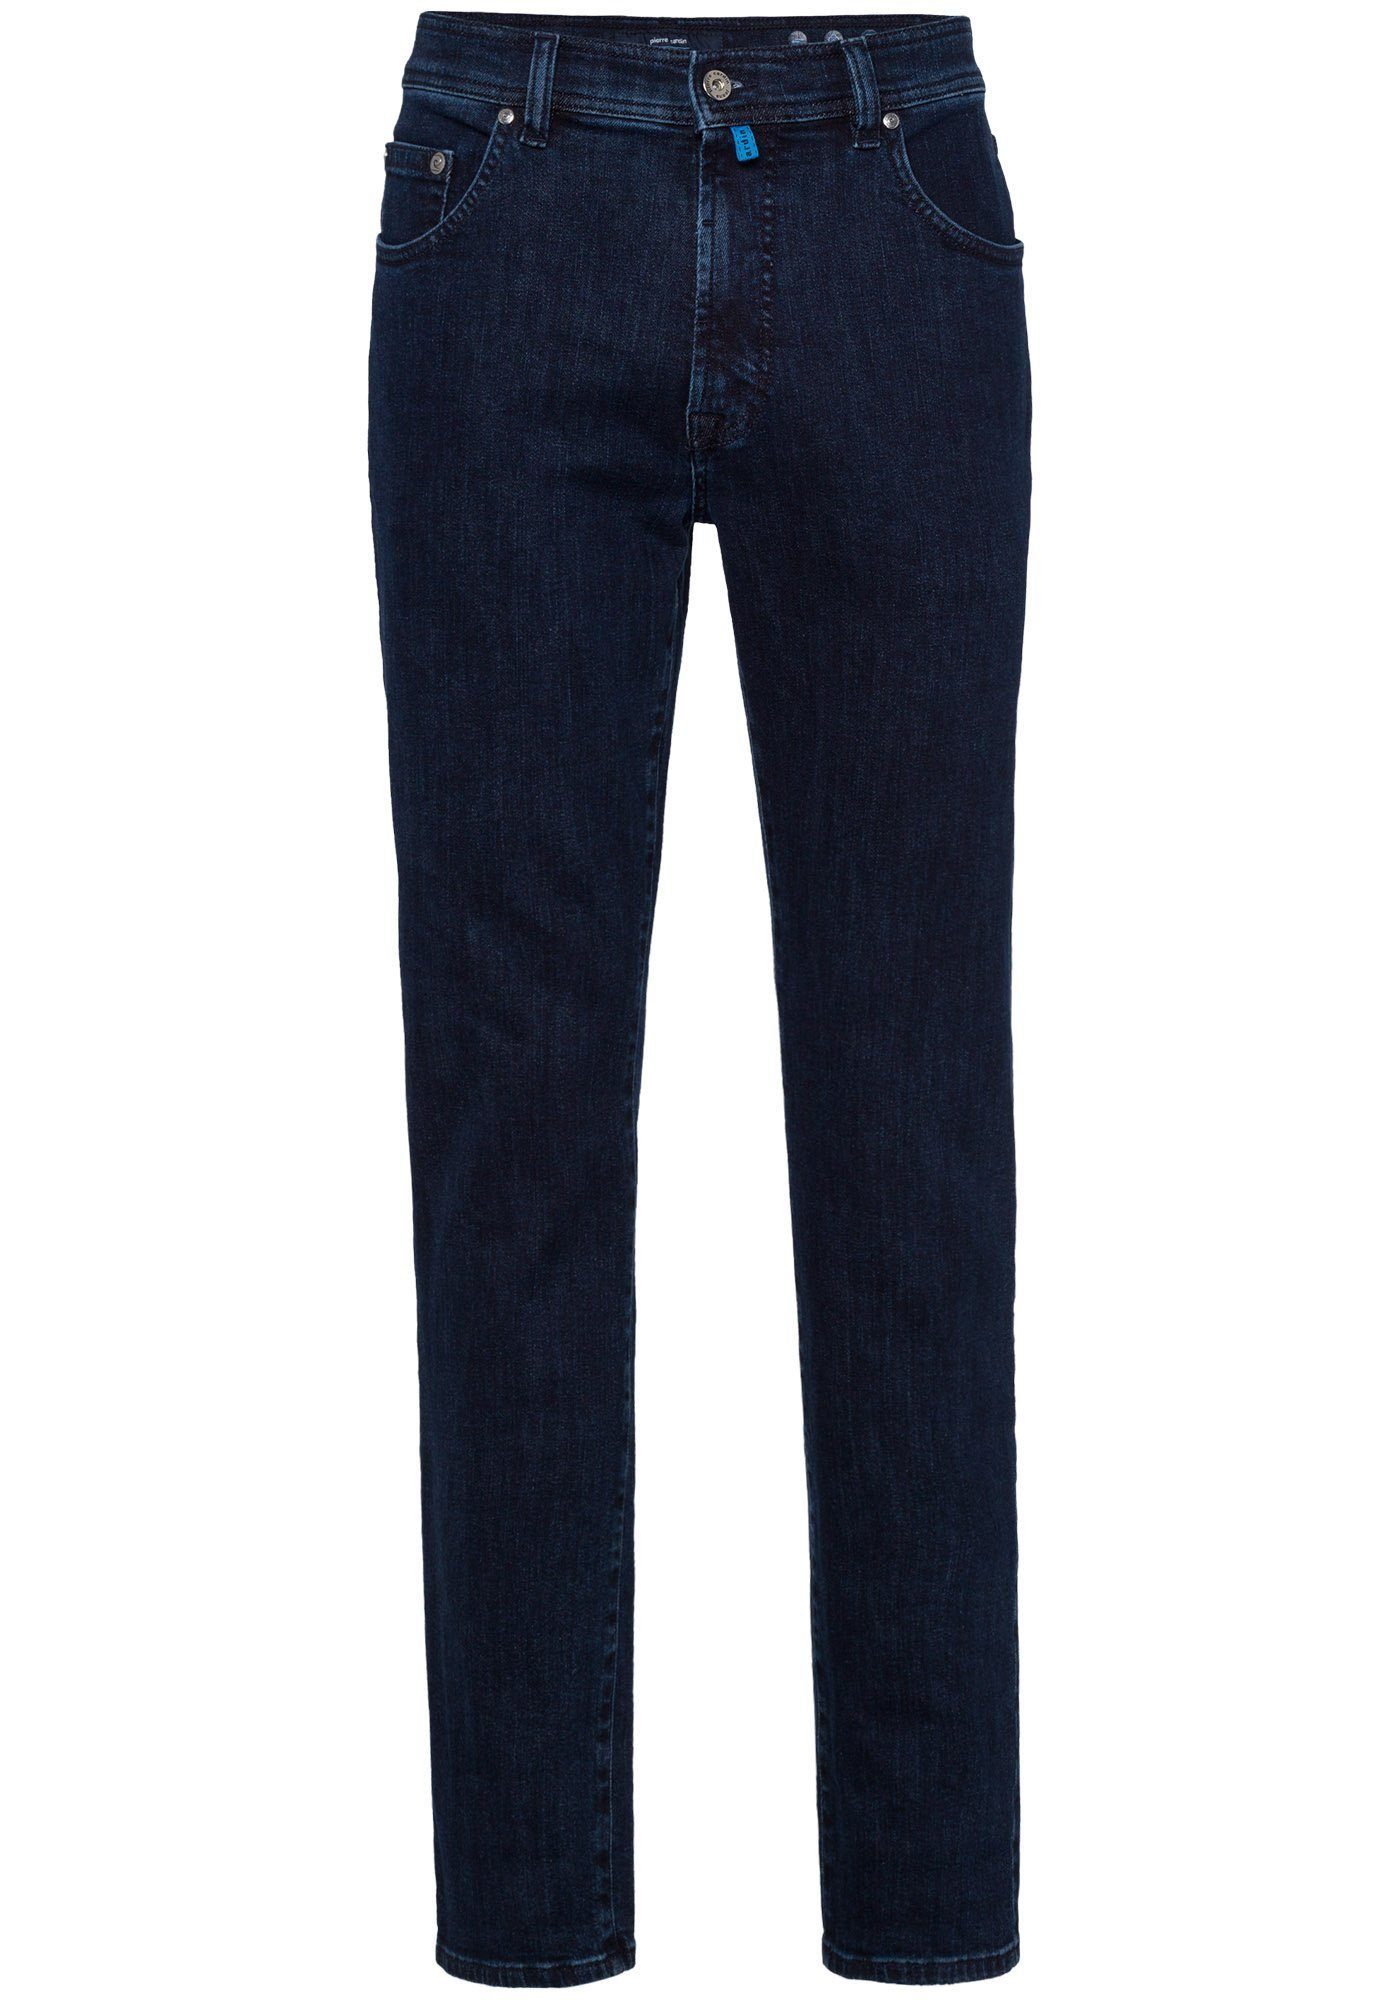 5-Pocket-Jeans Rivet Dijon blue Pierre Cardin dark Fit Denim Green Comfort stonewash Stretch